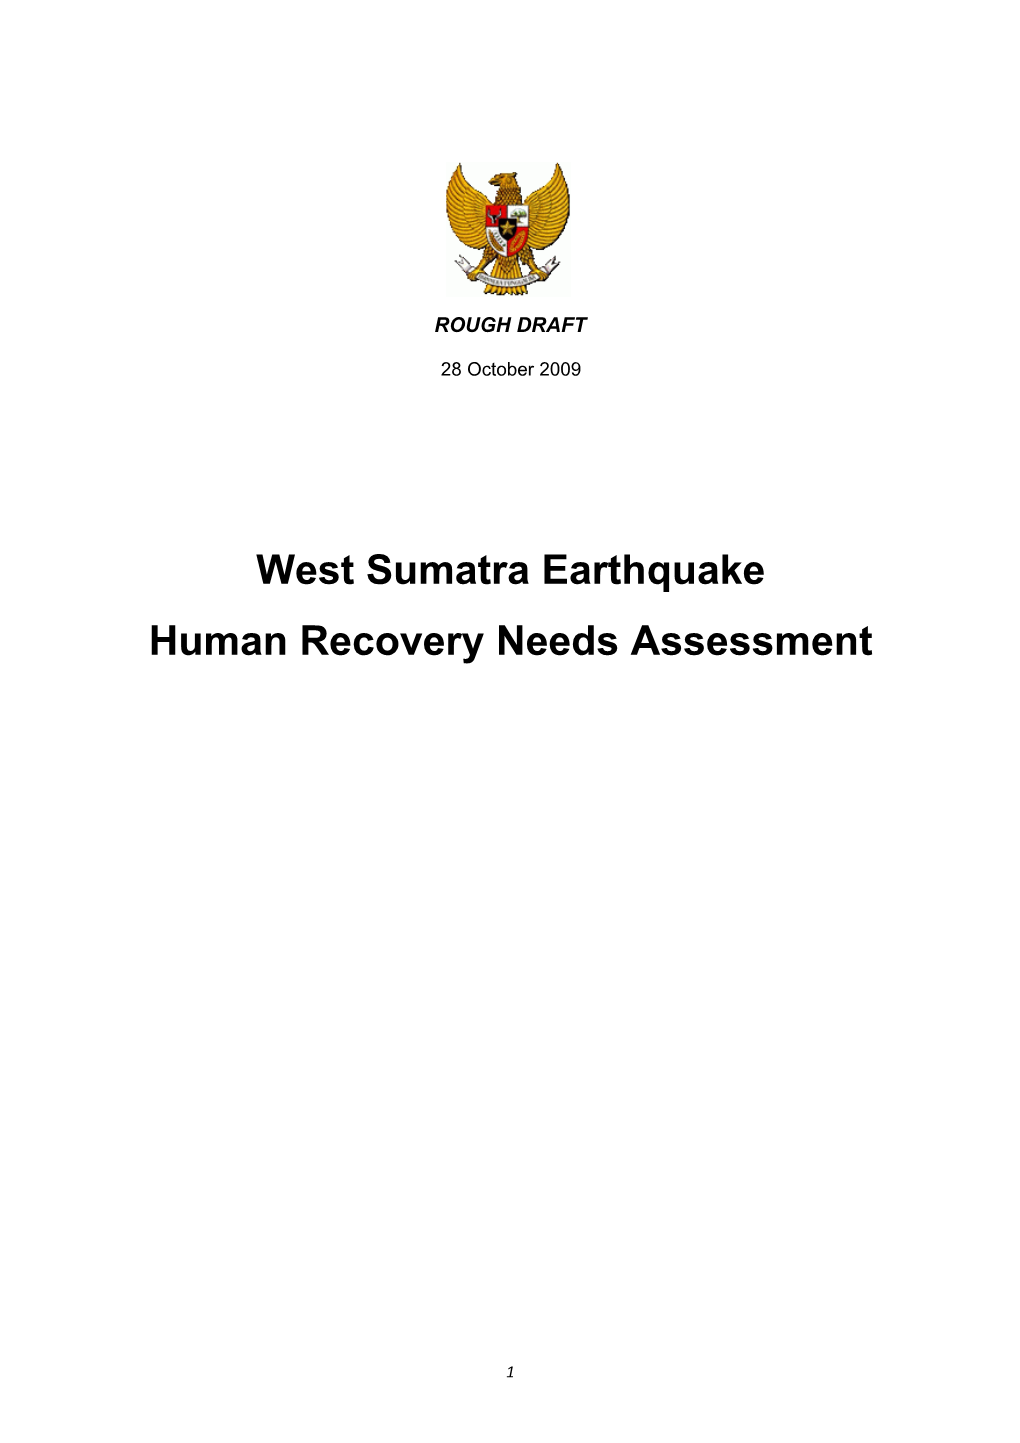 Human Recovery Needs Assessment (HRNA)